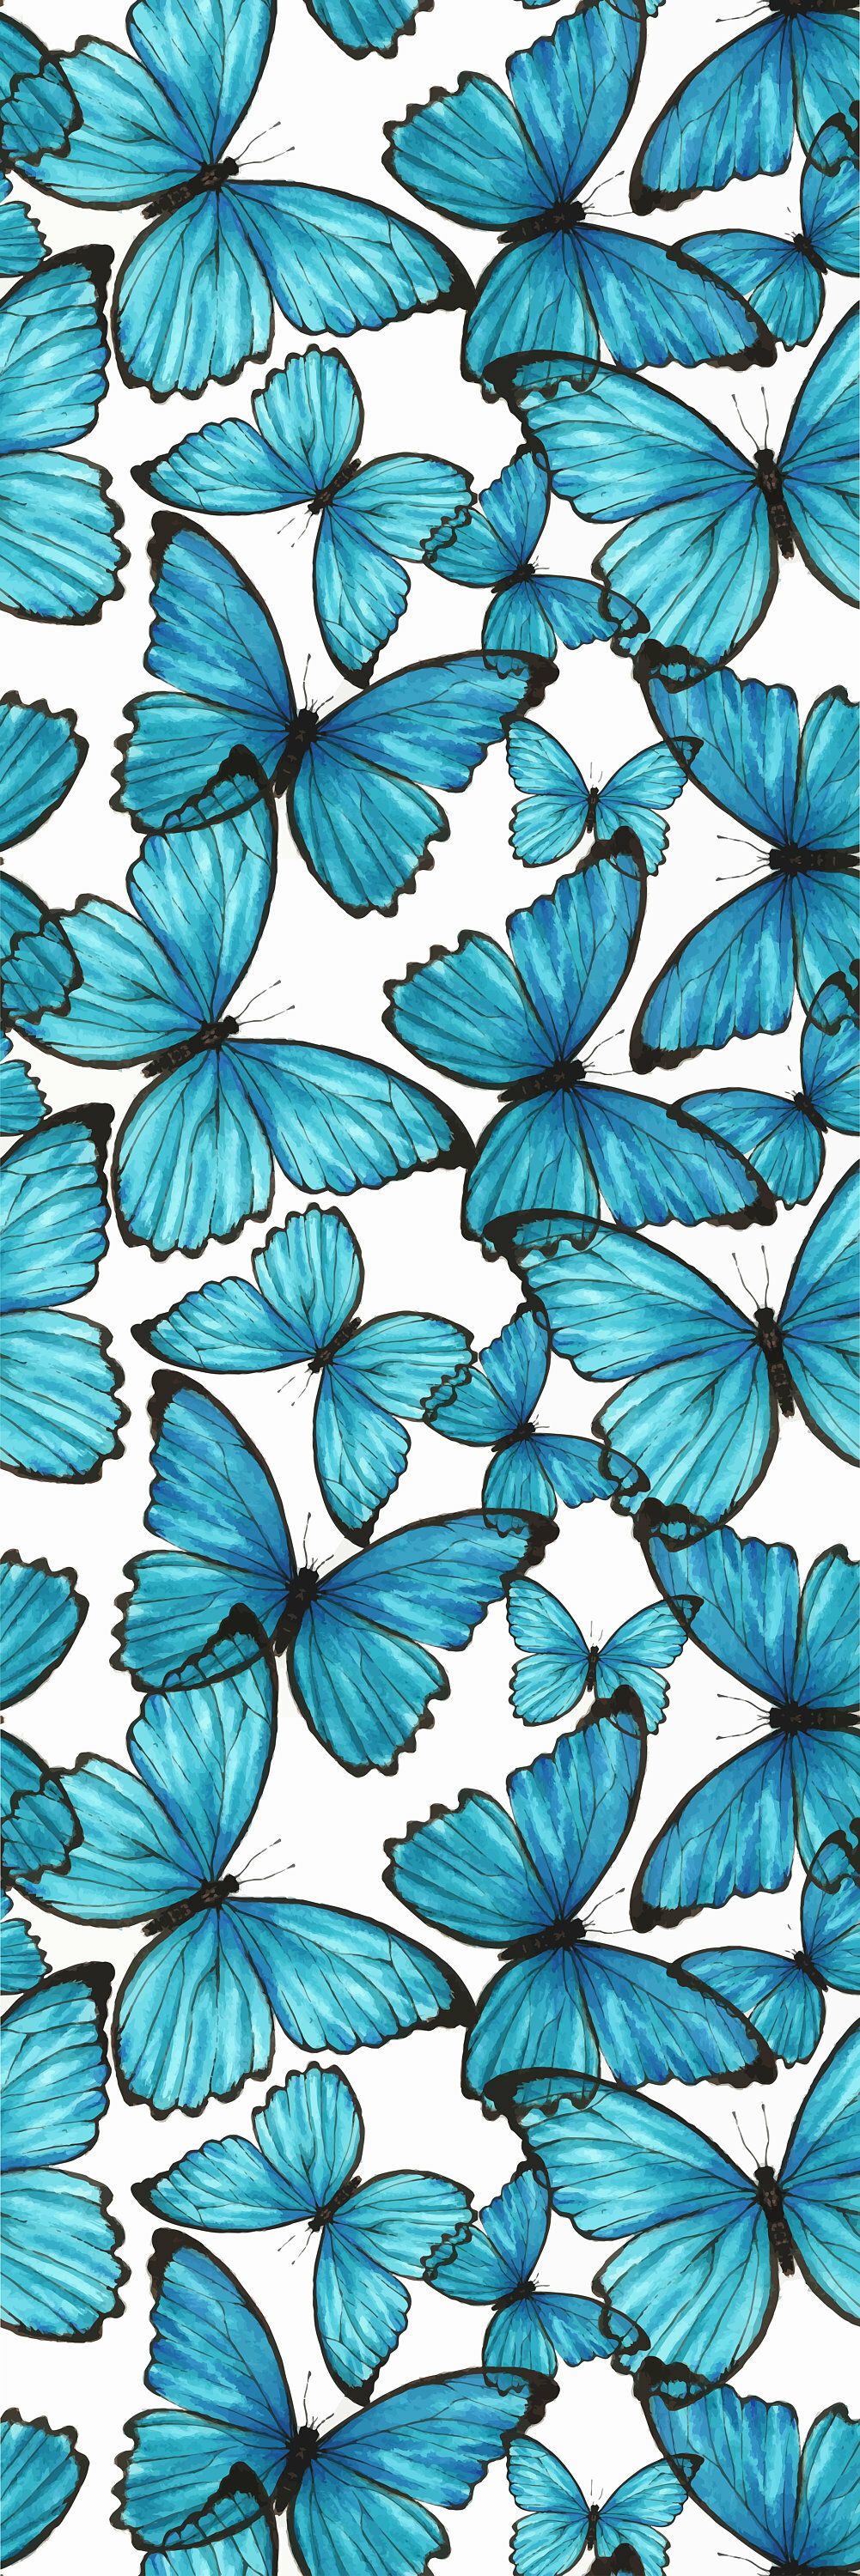 Winston Porter Boothby Removable Butterflies Nursery Wallpaper 10' L x 25 W Peel and Stick Wallpaper Roll